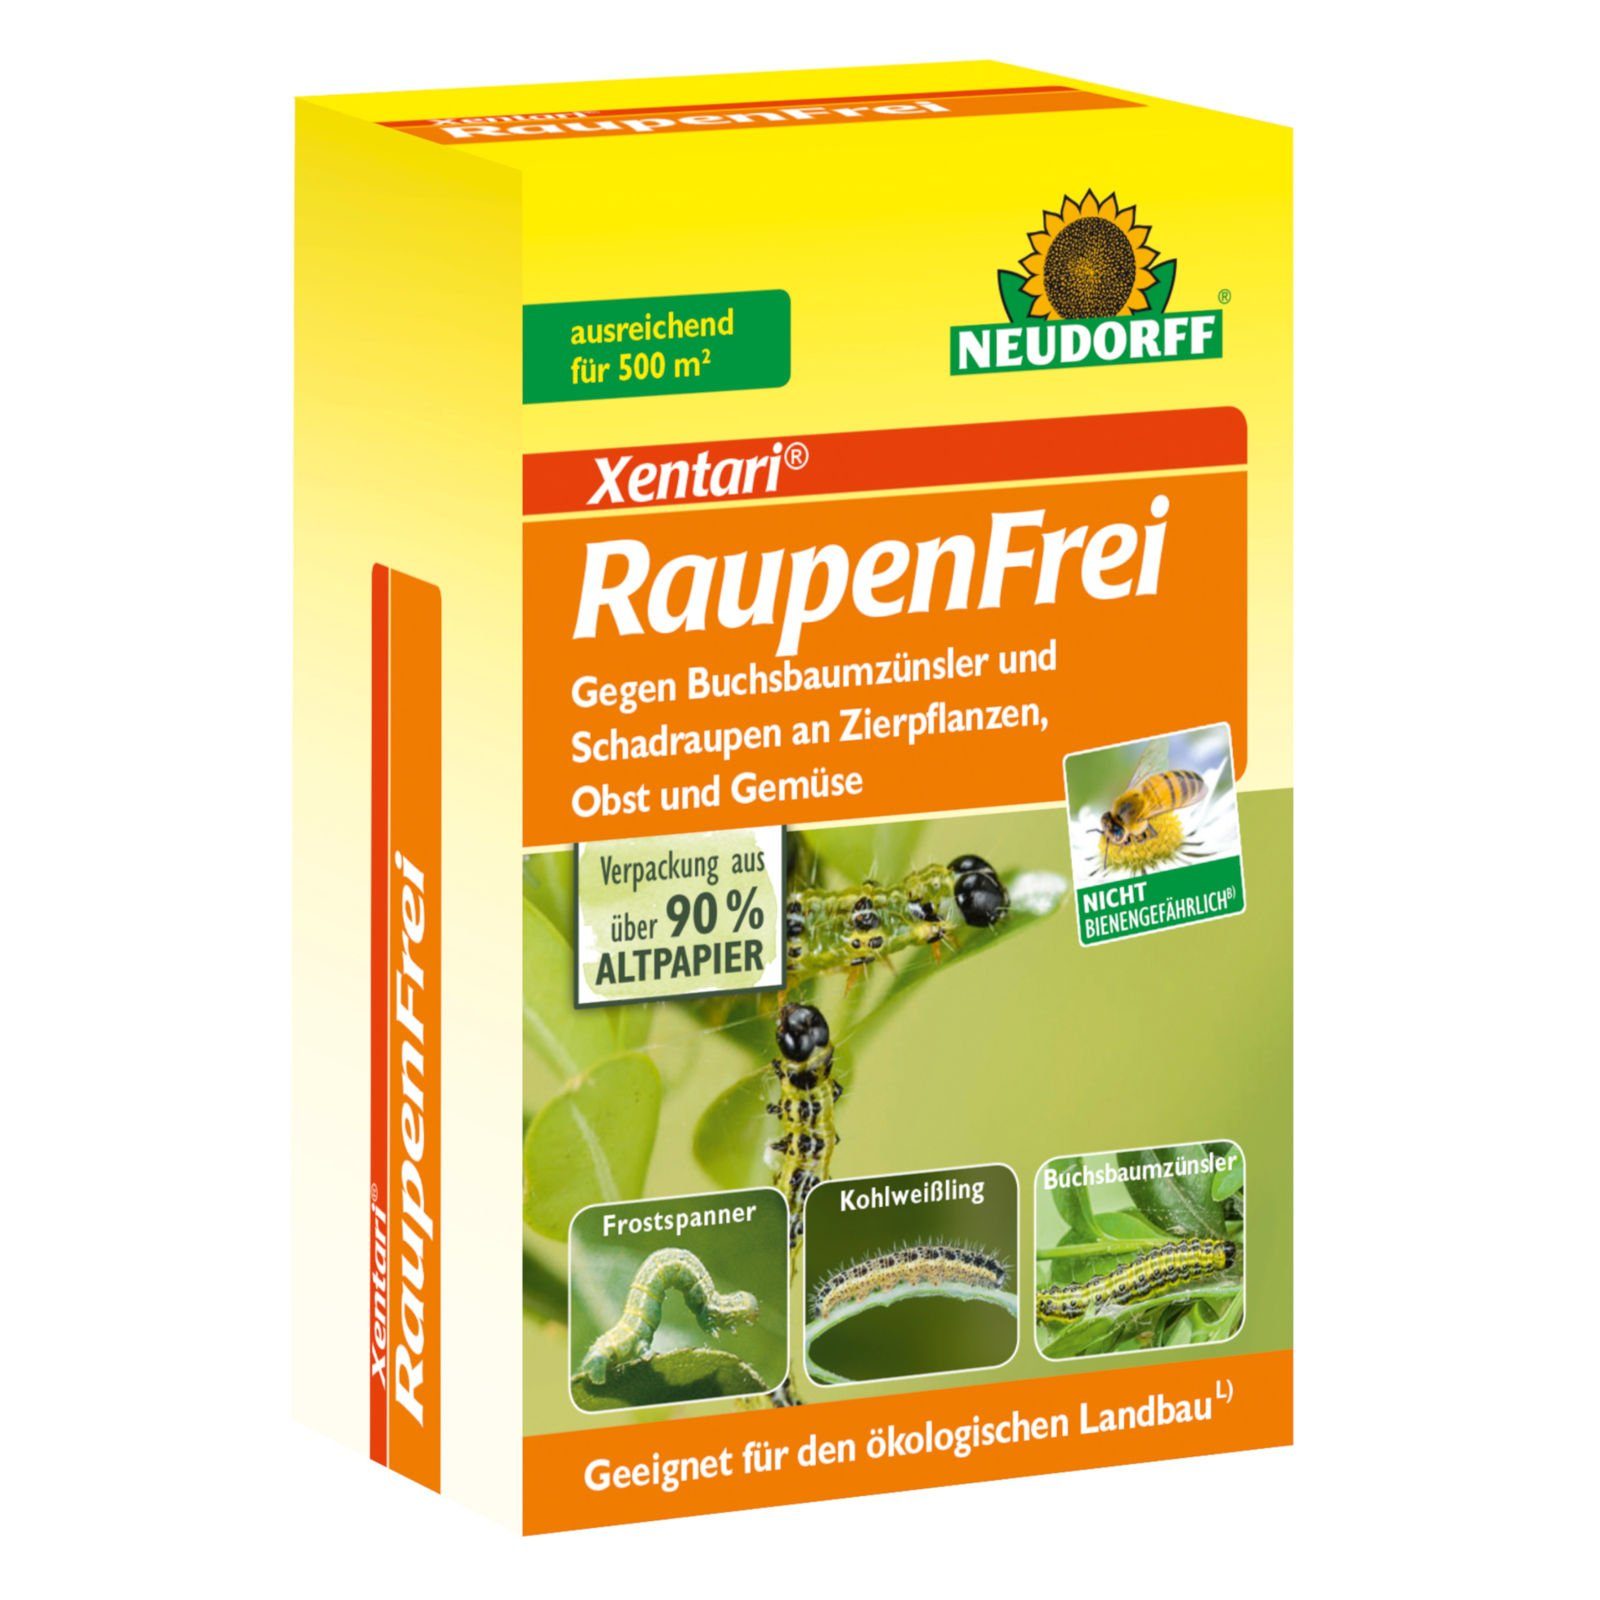 Neudorff Insektenvernichtungsmittel - 25 XenTari g Raupenfrei